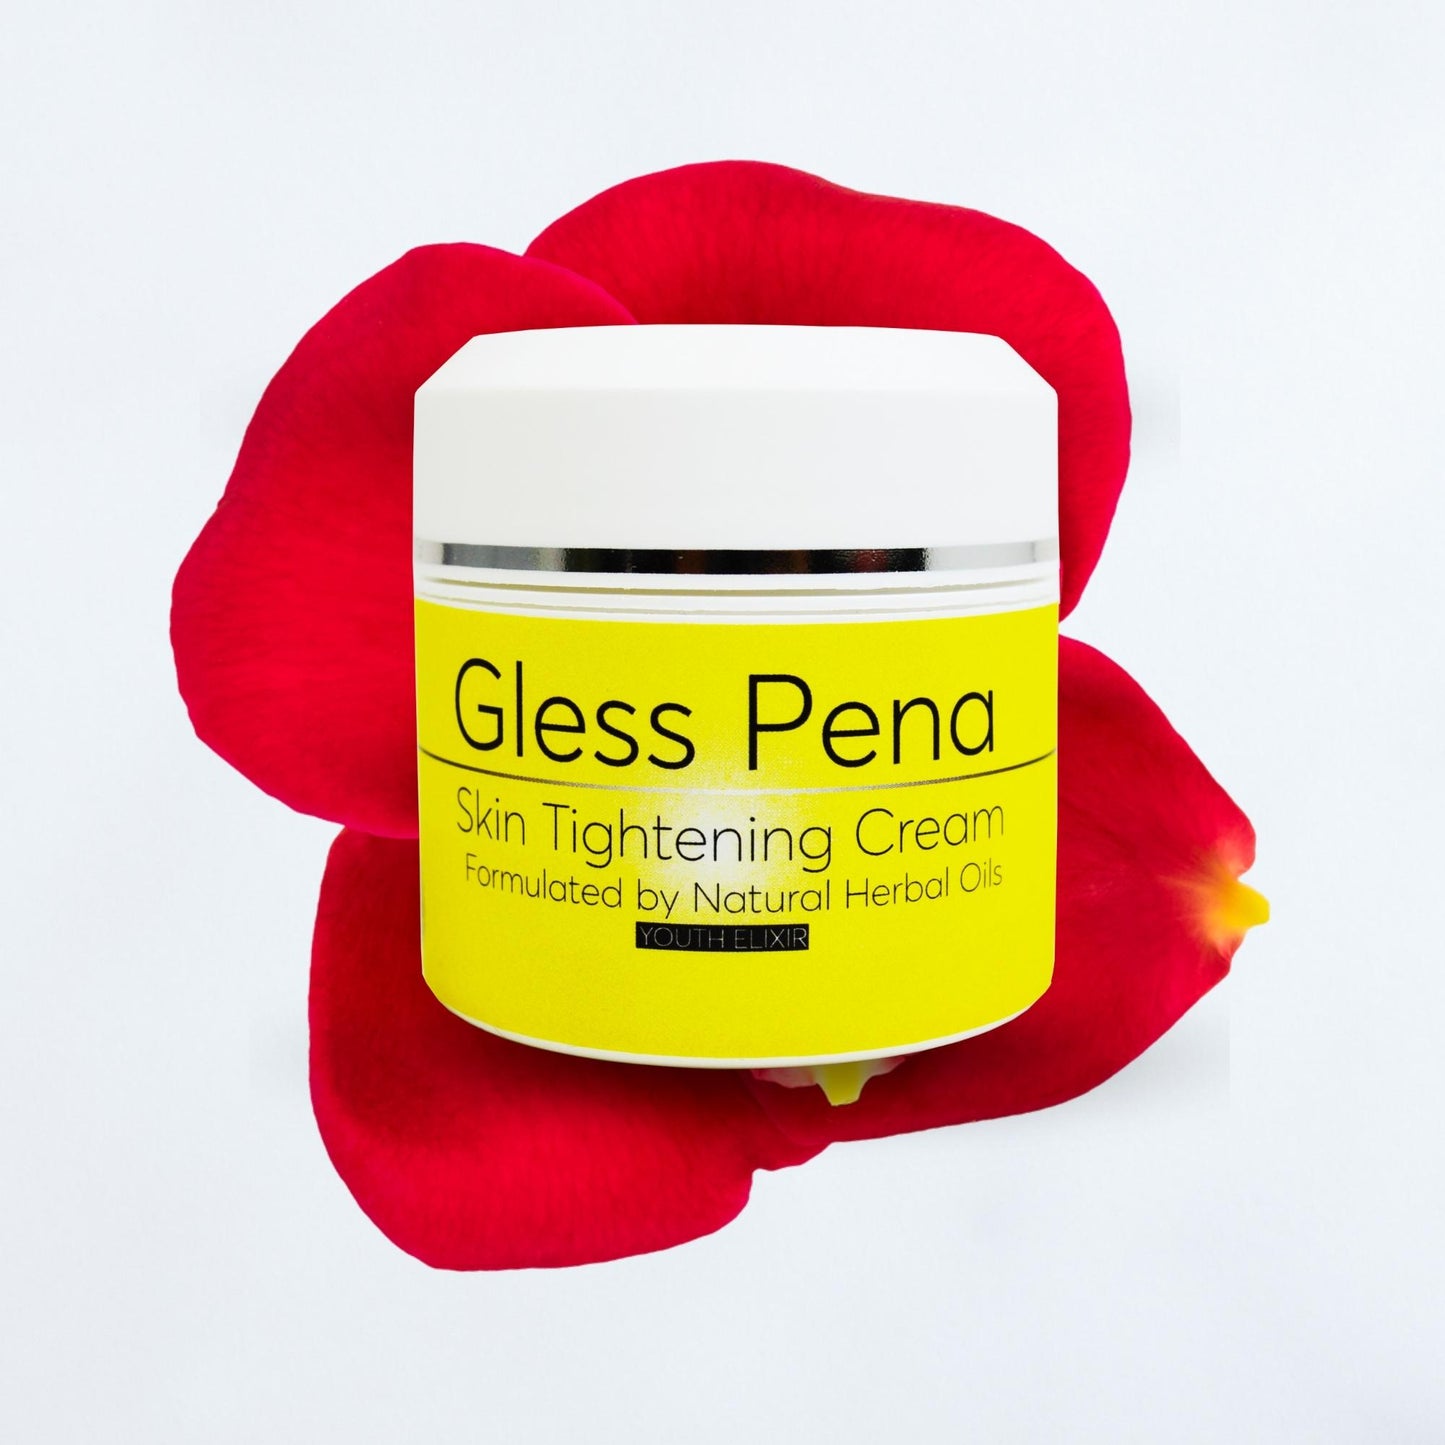 Gless Pena Skin Tightening Cream